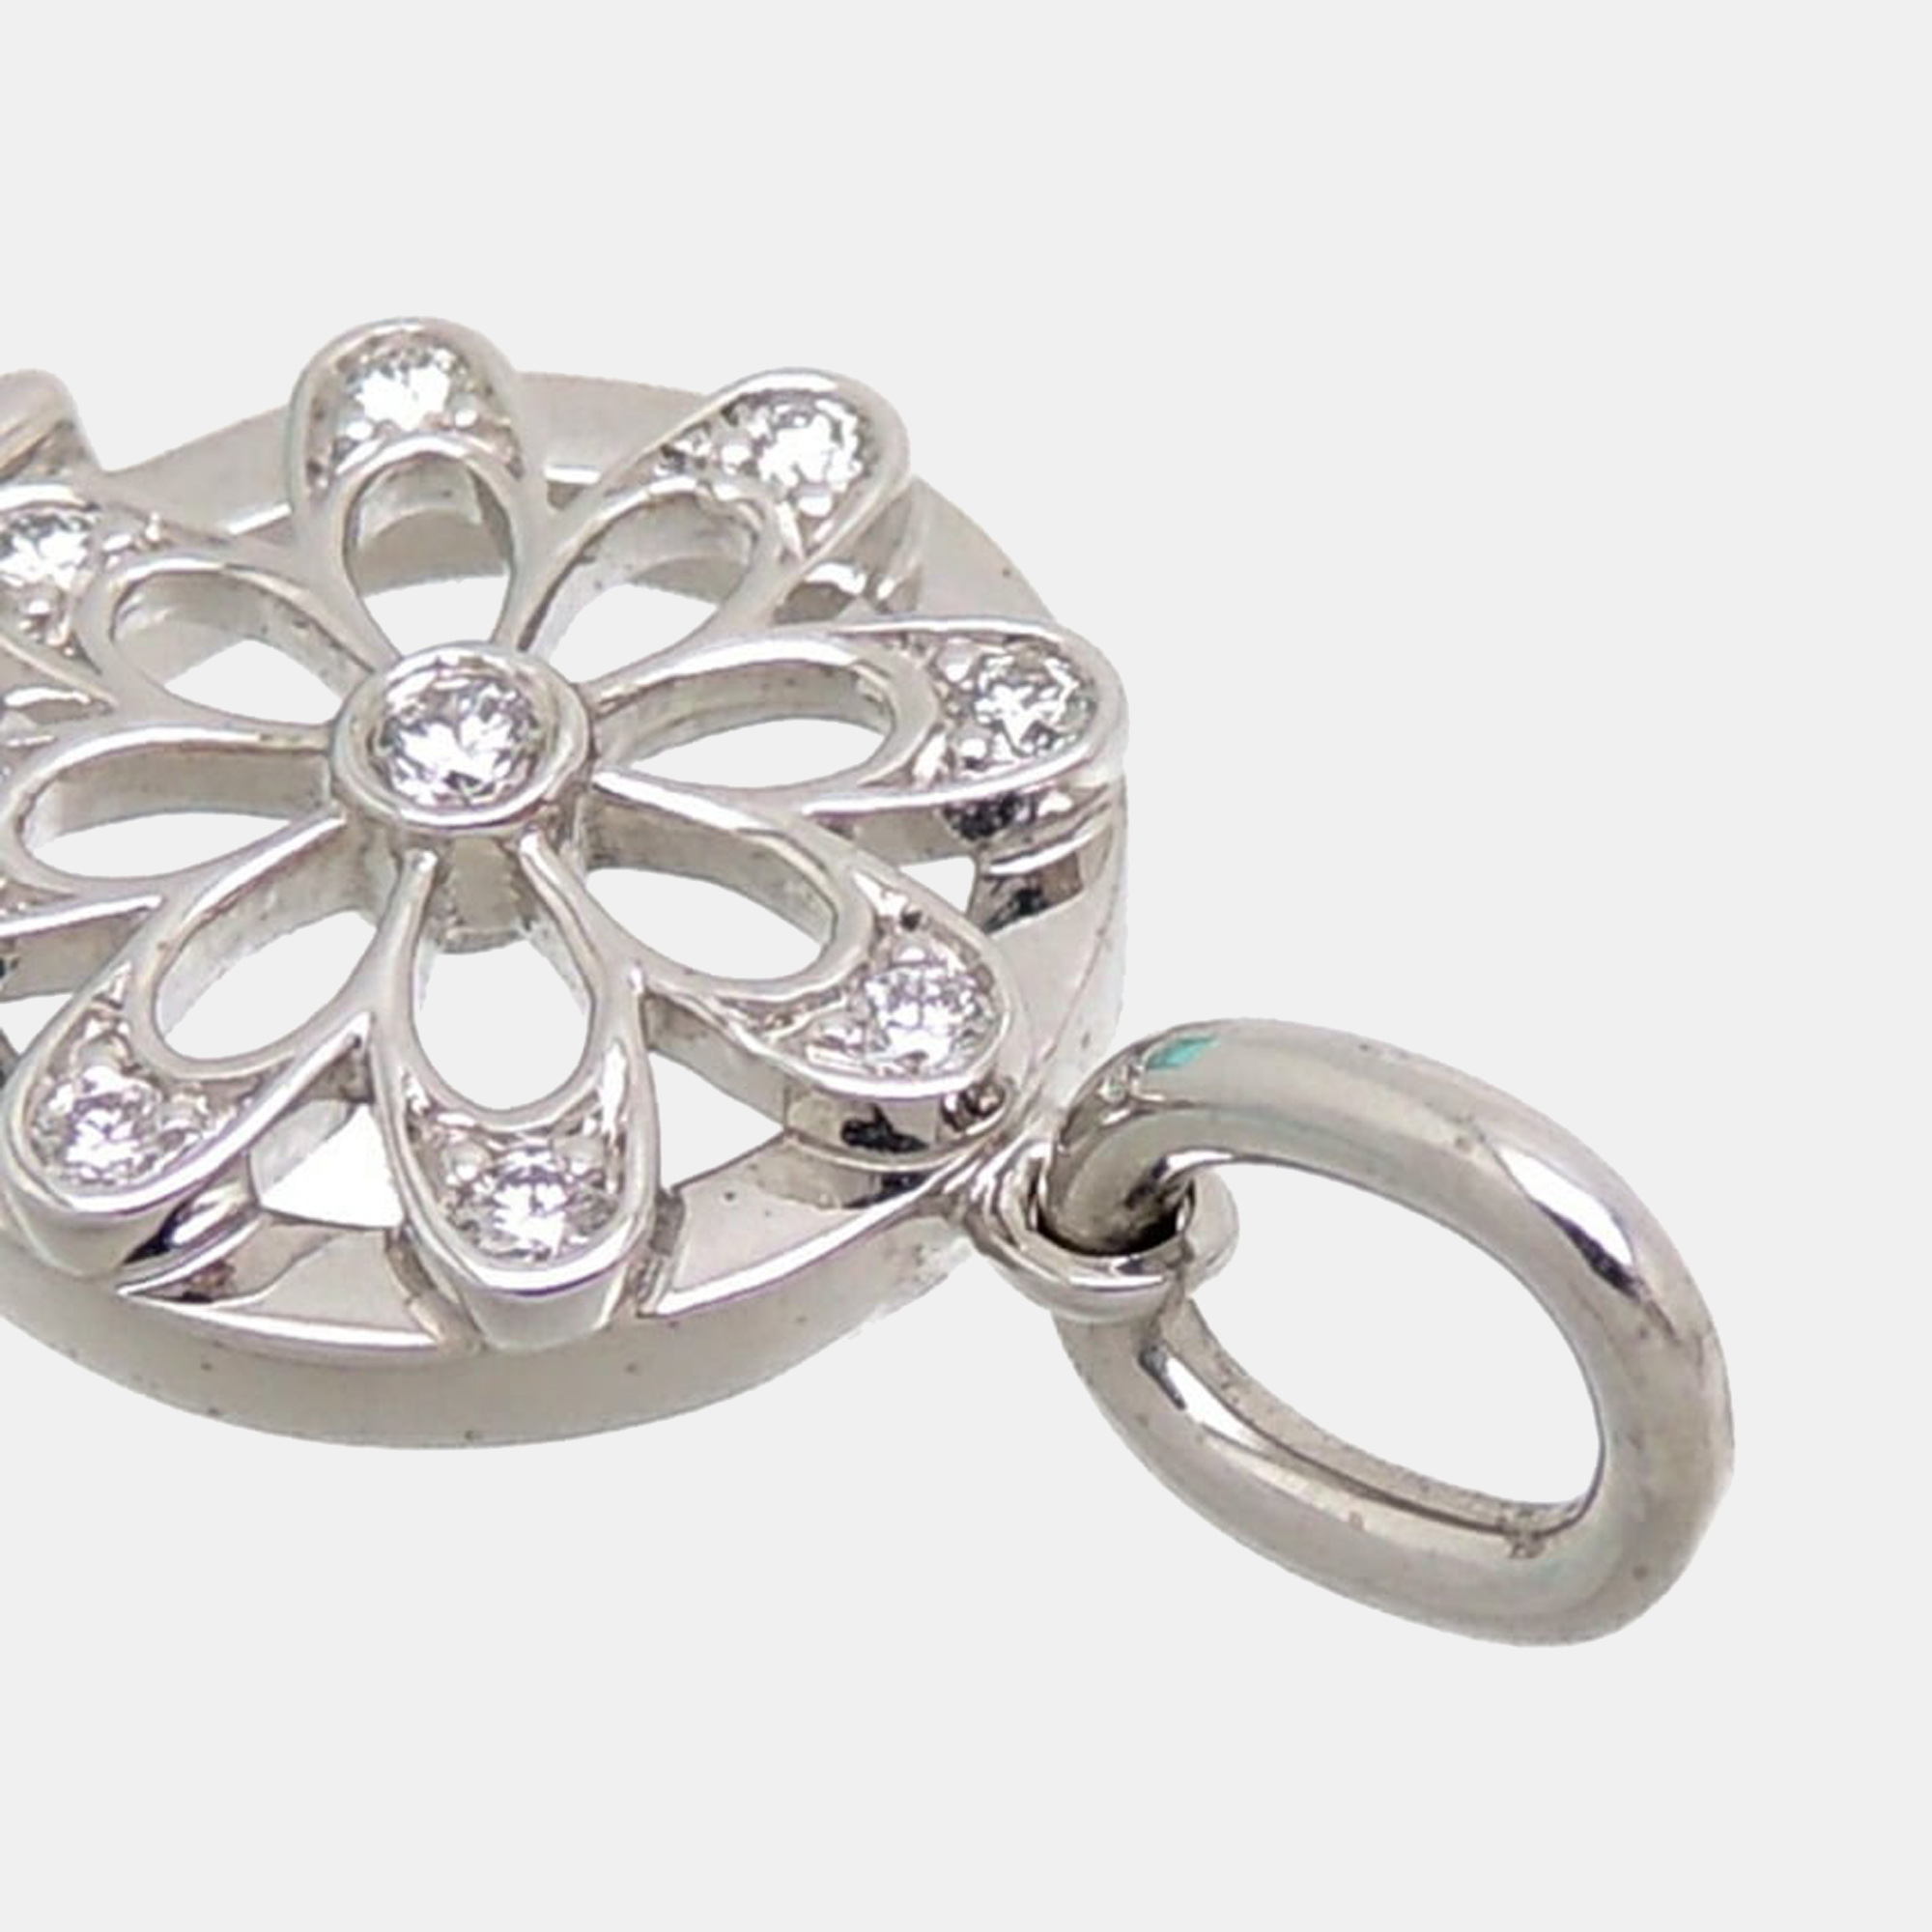 Tiffany & Co. Tiffany Keys Floral 18K White Gold Diamond Charms And Pendant